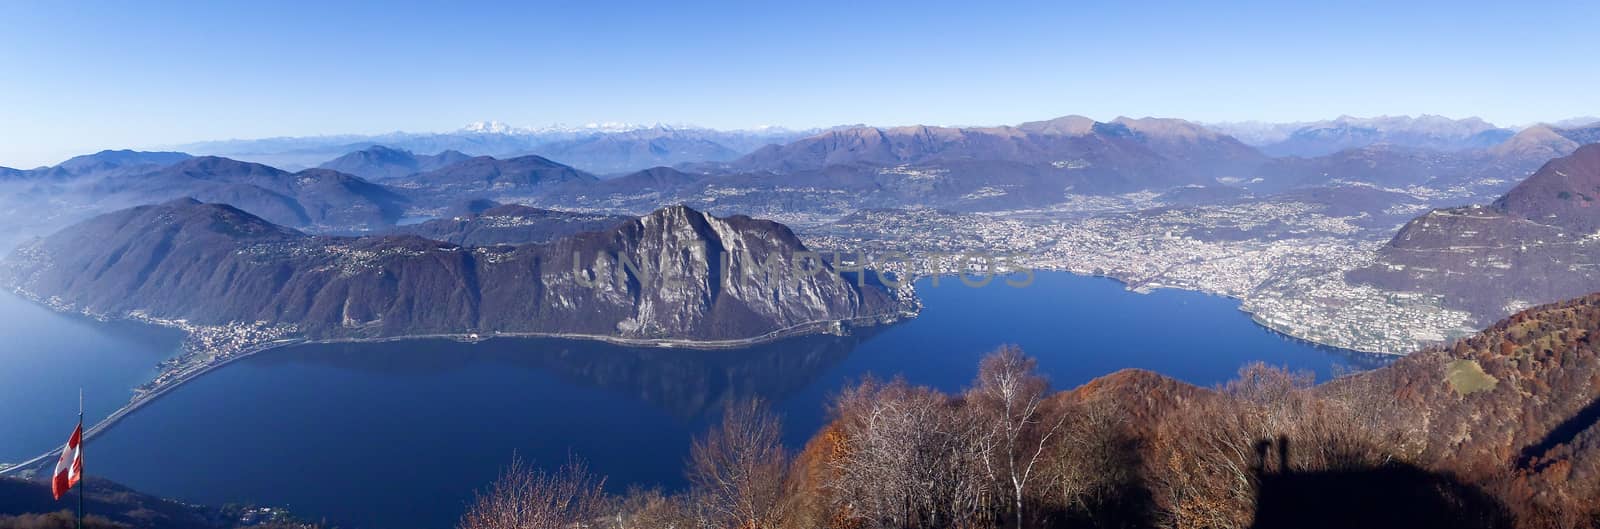 Sighignola, Italy: the Italian Balcony with views of Lake Lugano and Monte San Salvatore